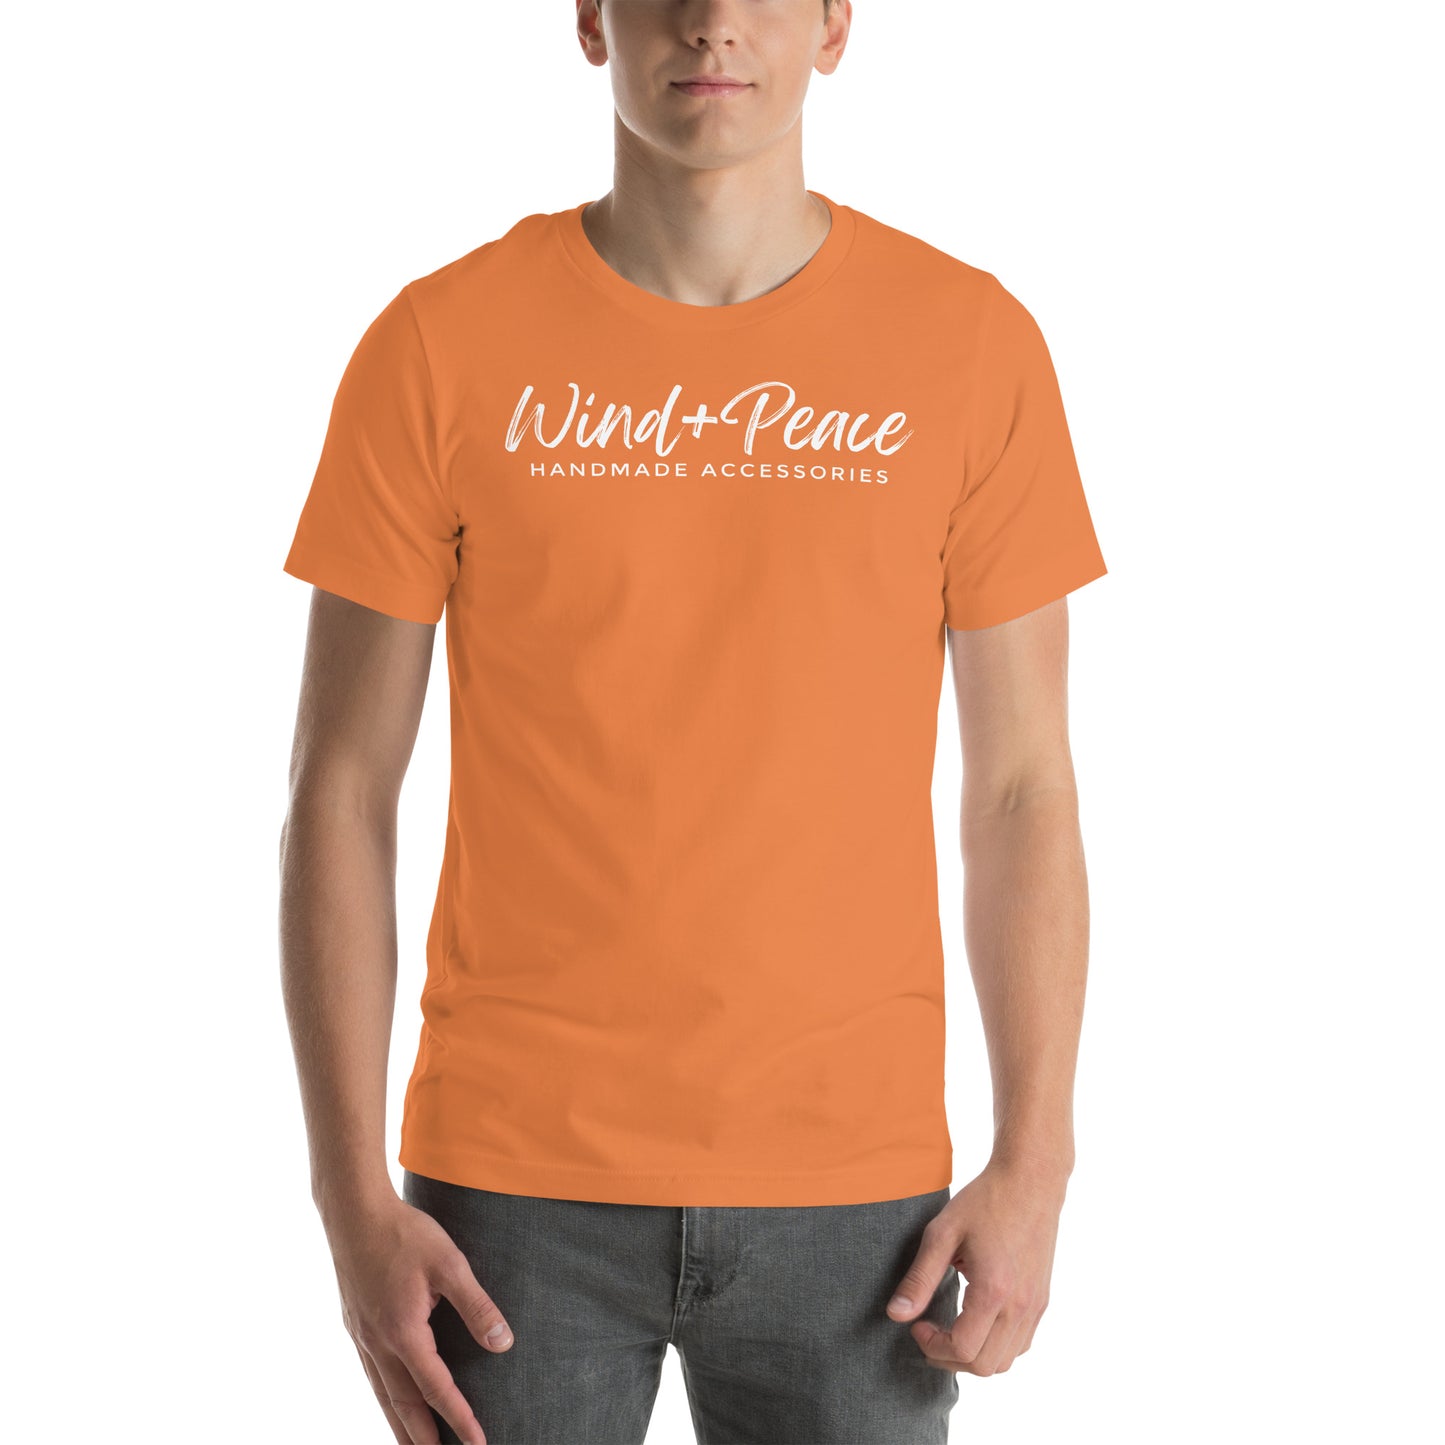 W+P Large Front Graphic Unisex t-shirt - Solid Colors